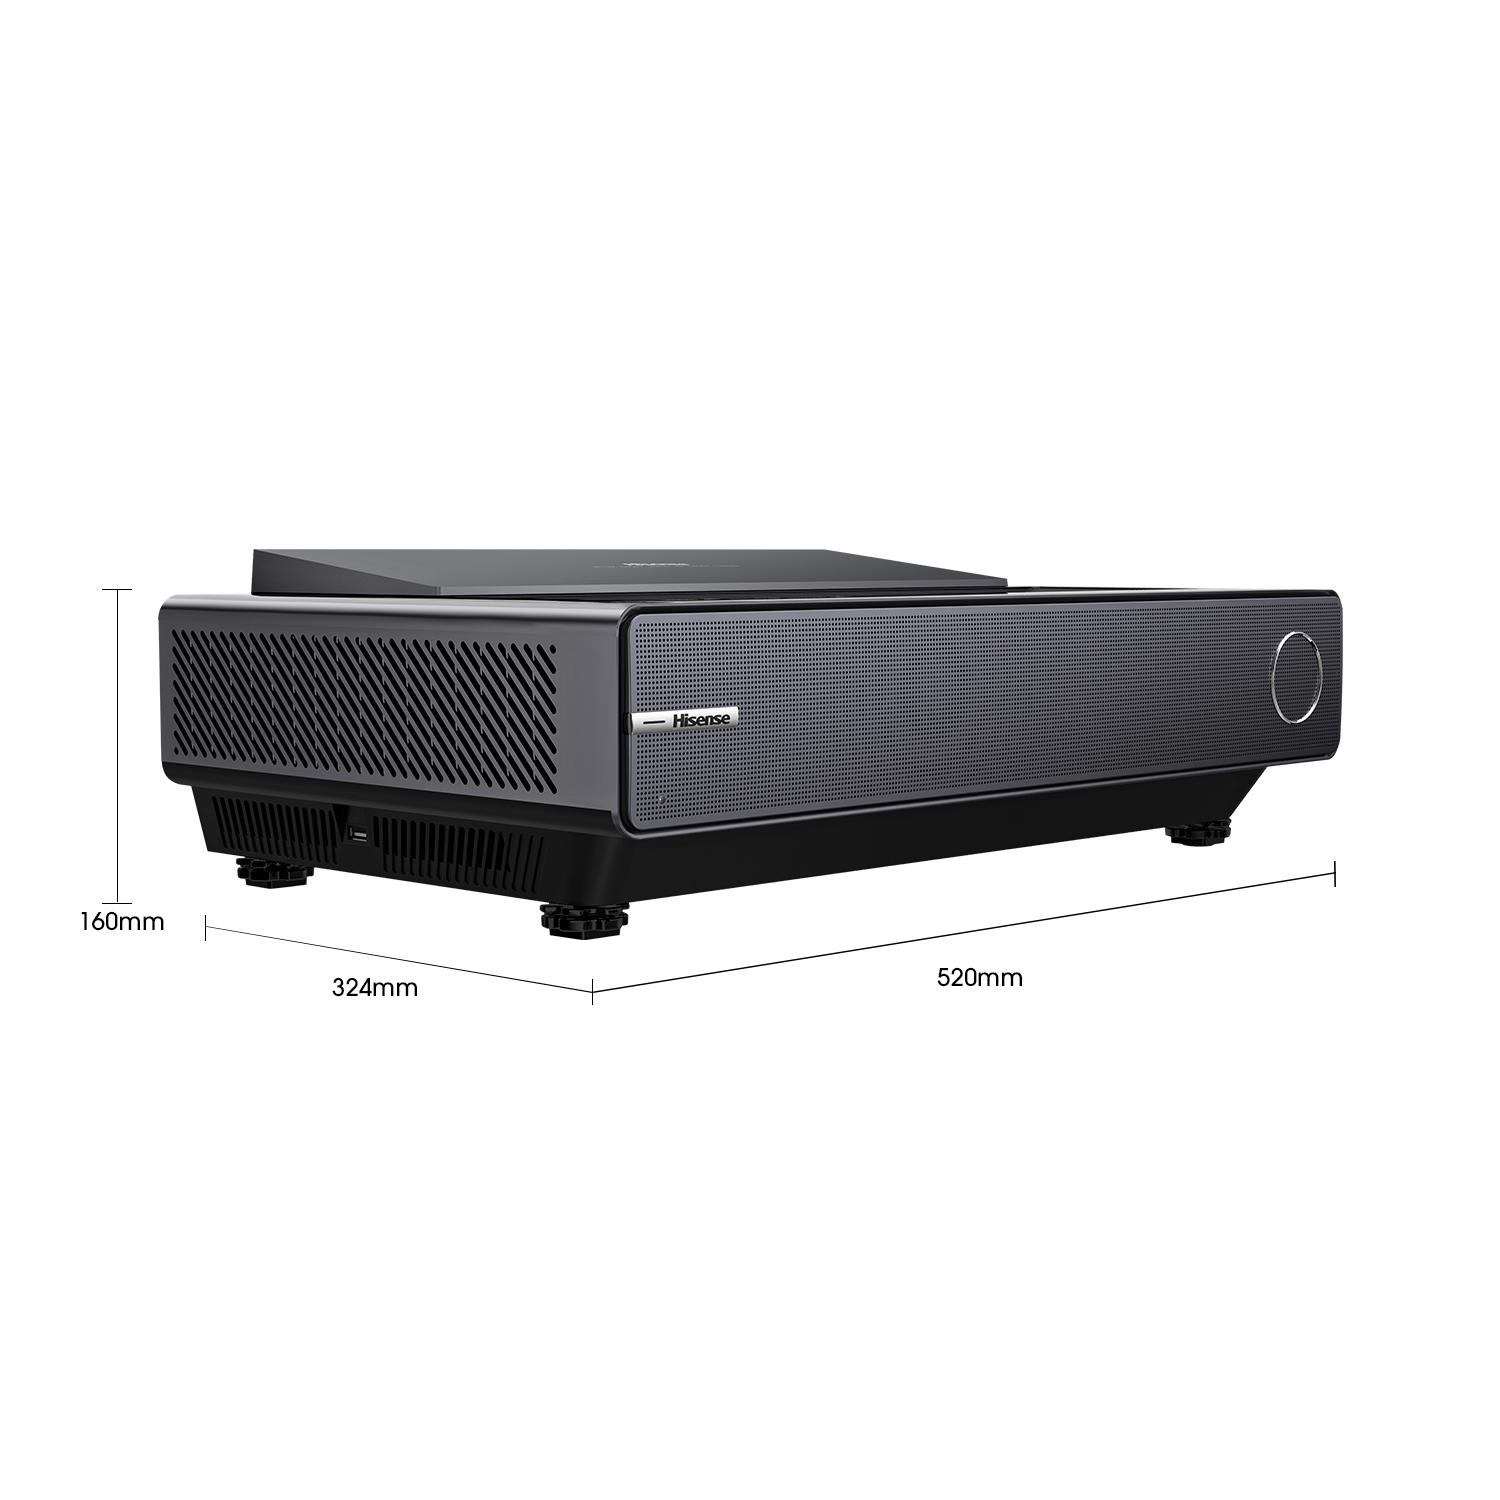 HISENSE TV Konsole Pro (UHD PX1 4K, Laser 2200 Lumen, WLAN)